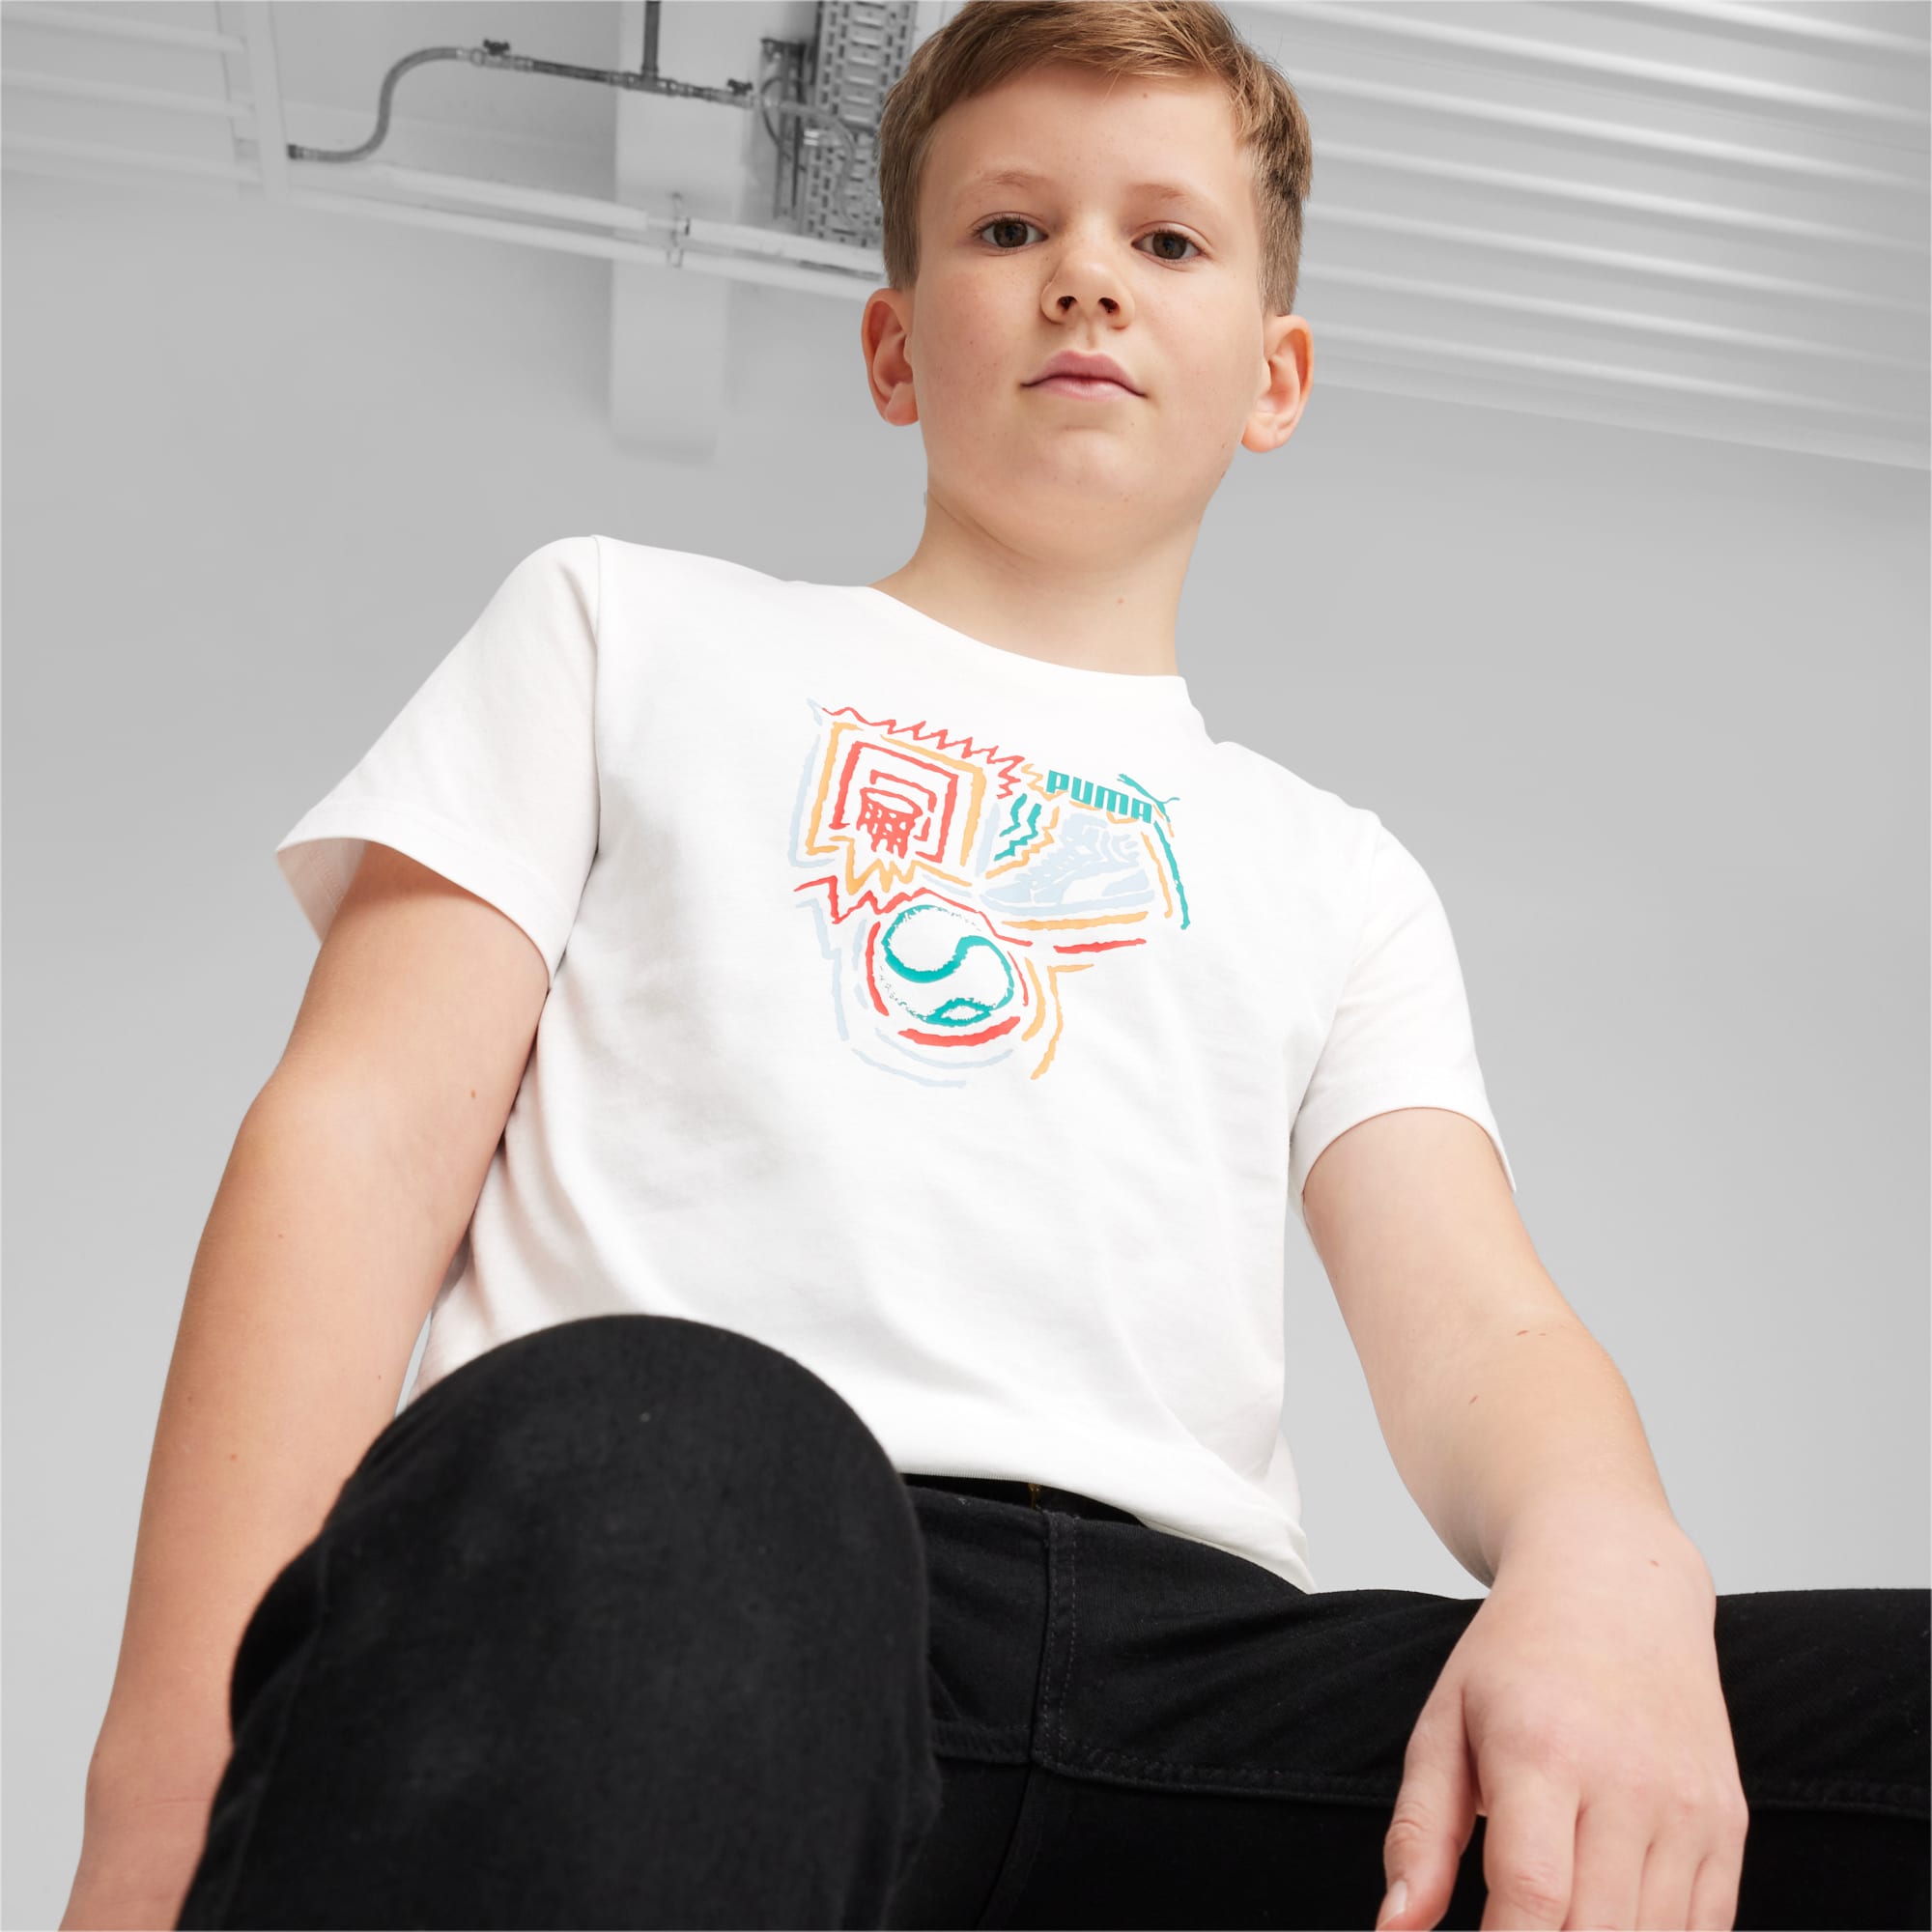 PUMA Graphics Year Of Sports Youth T-Shirt, White